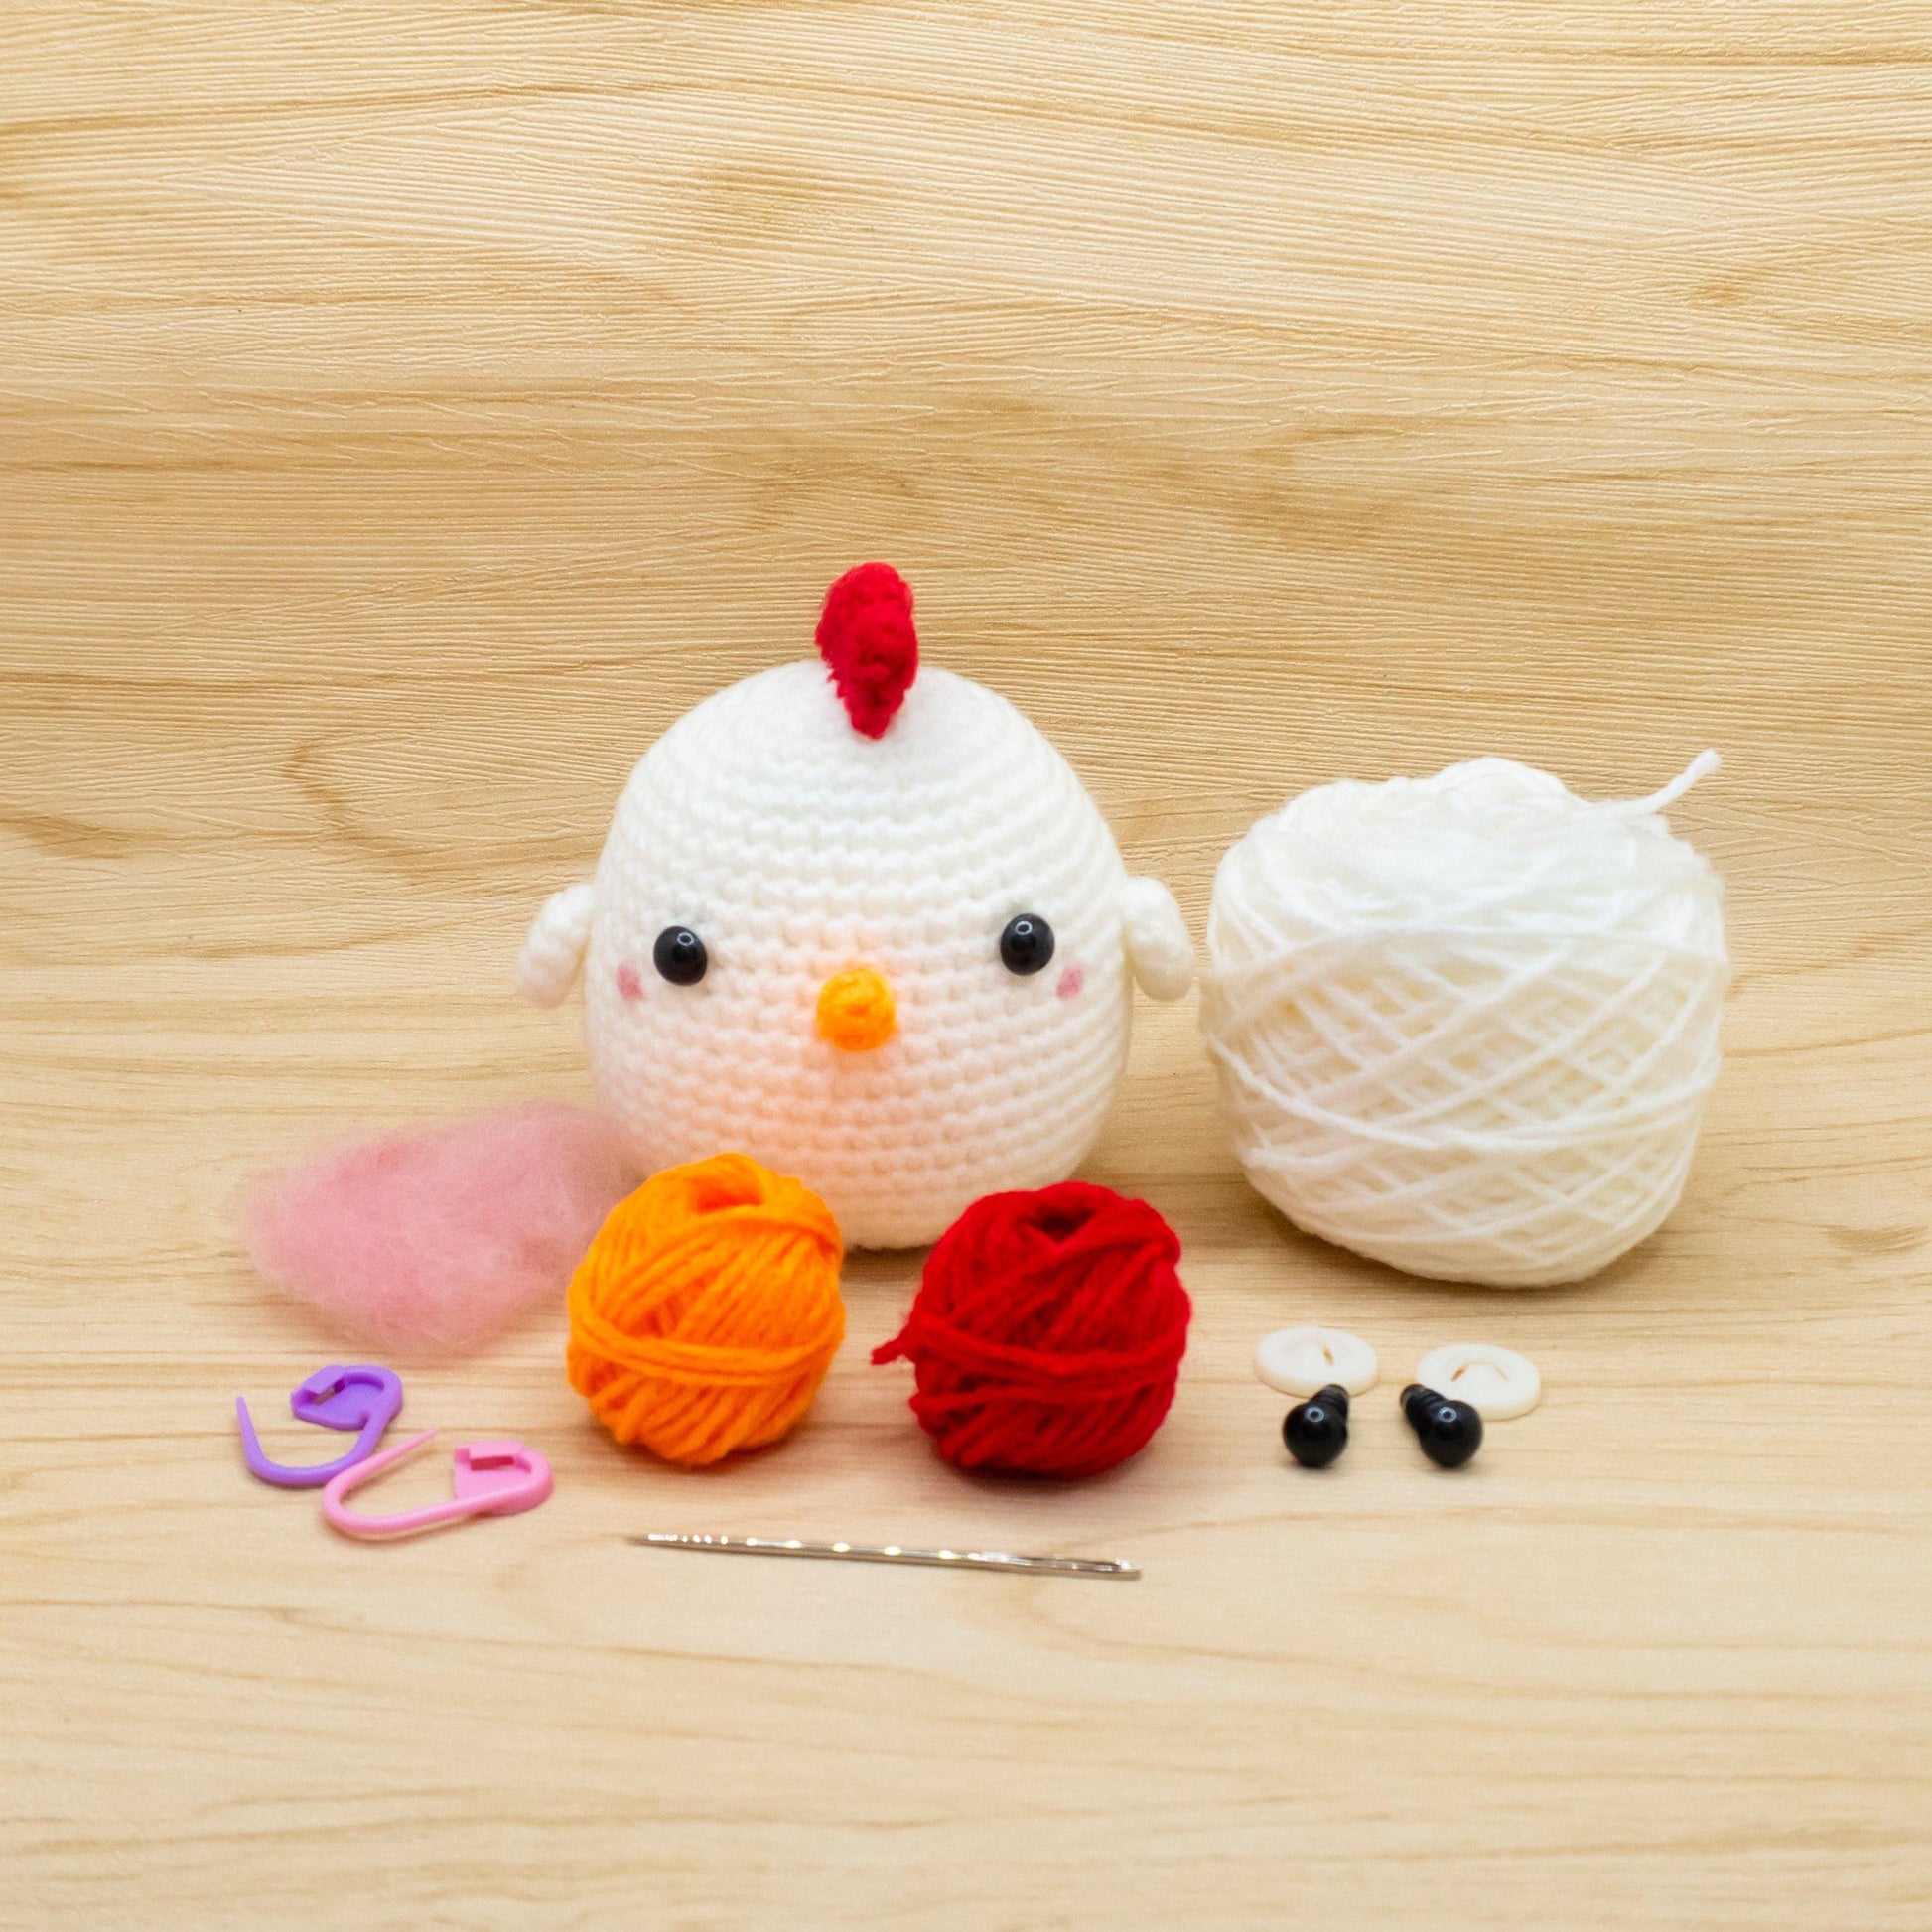 Crochet Amigurumi Kits